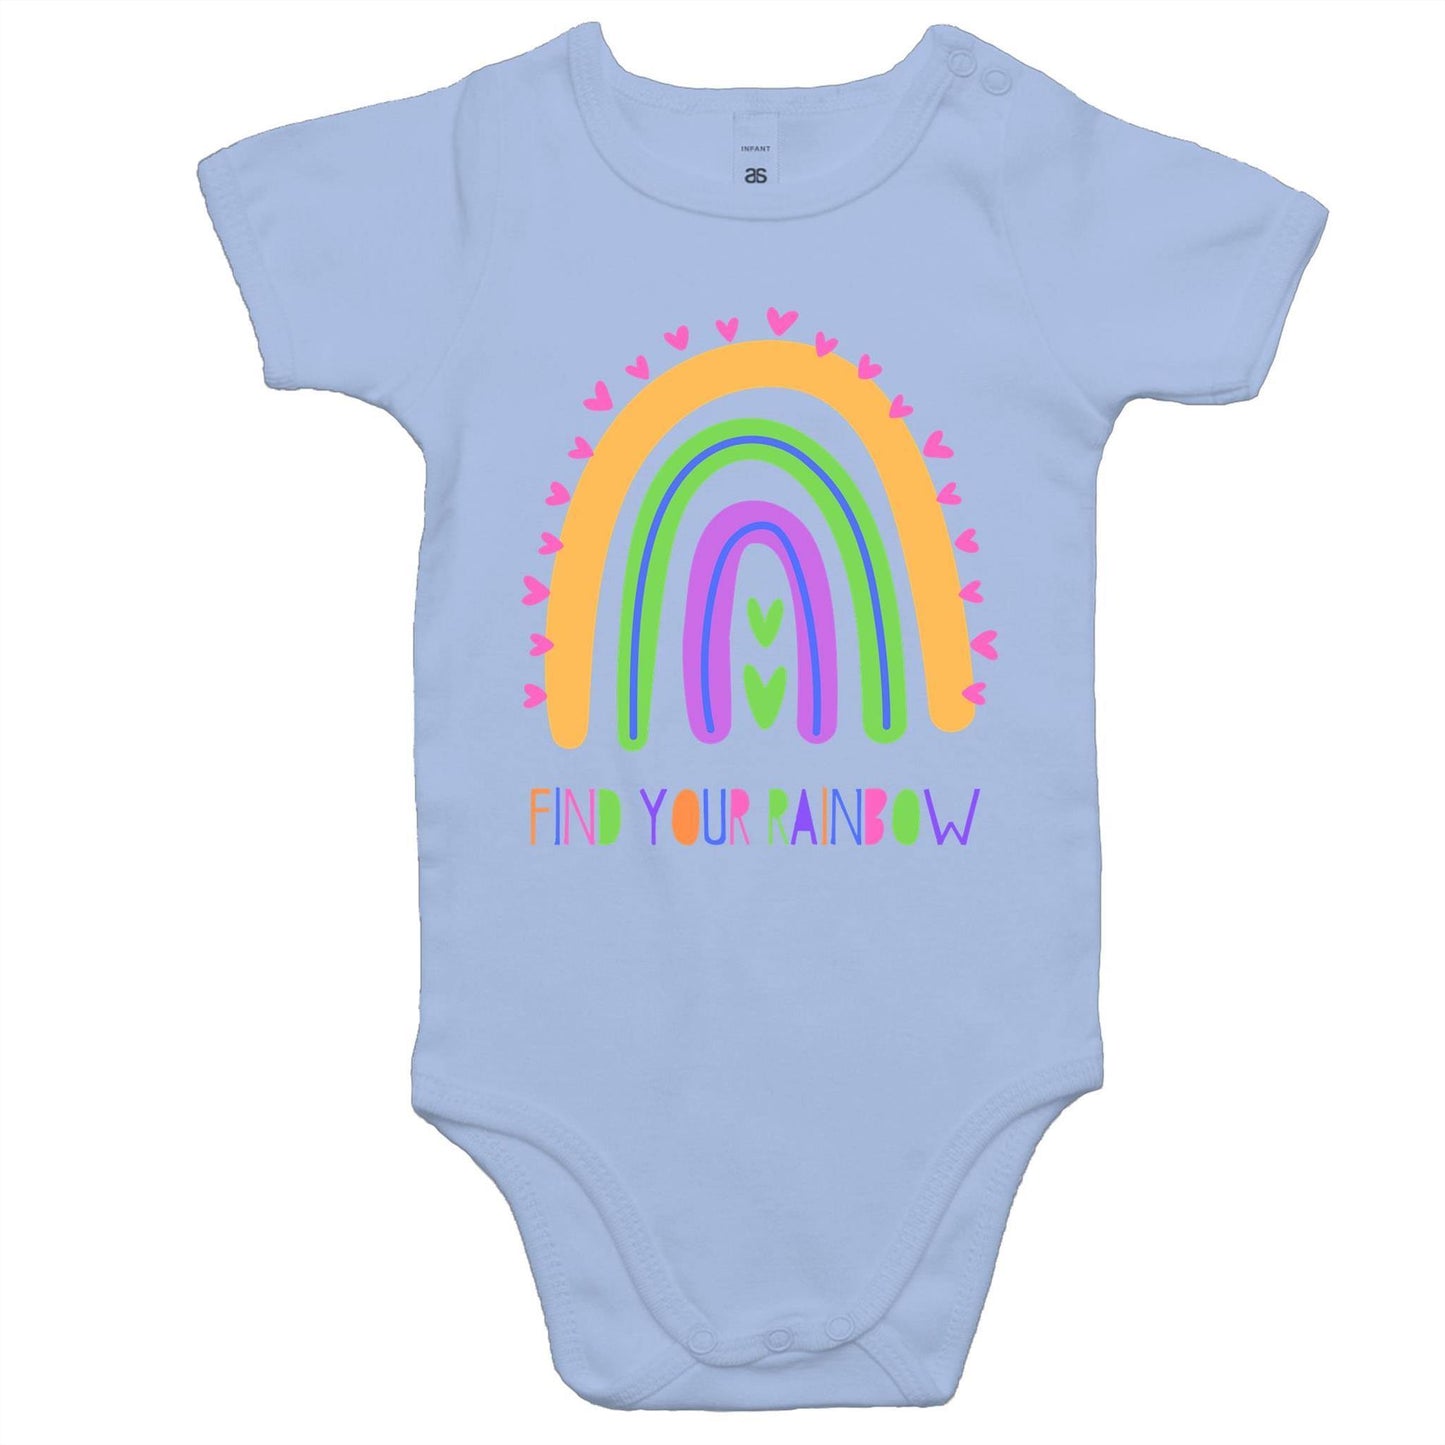 Find Your Rainbow - Baby Bodysuit Powder Blue Baby Bodysuit kids